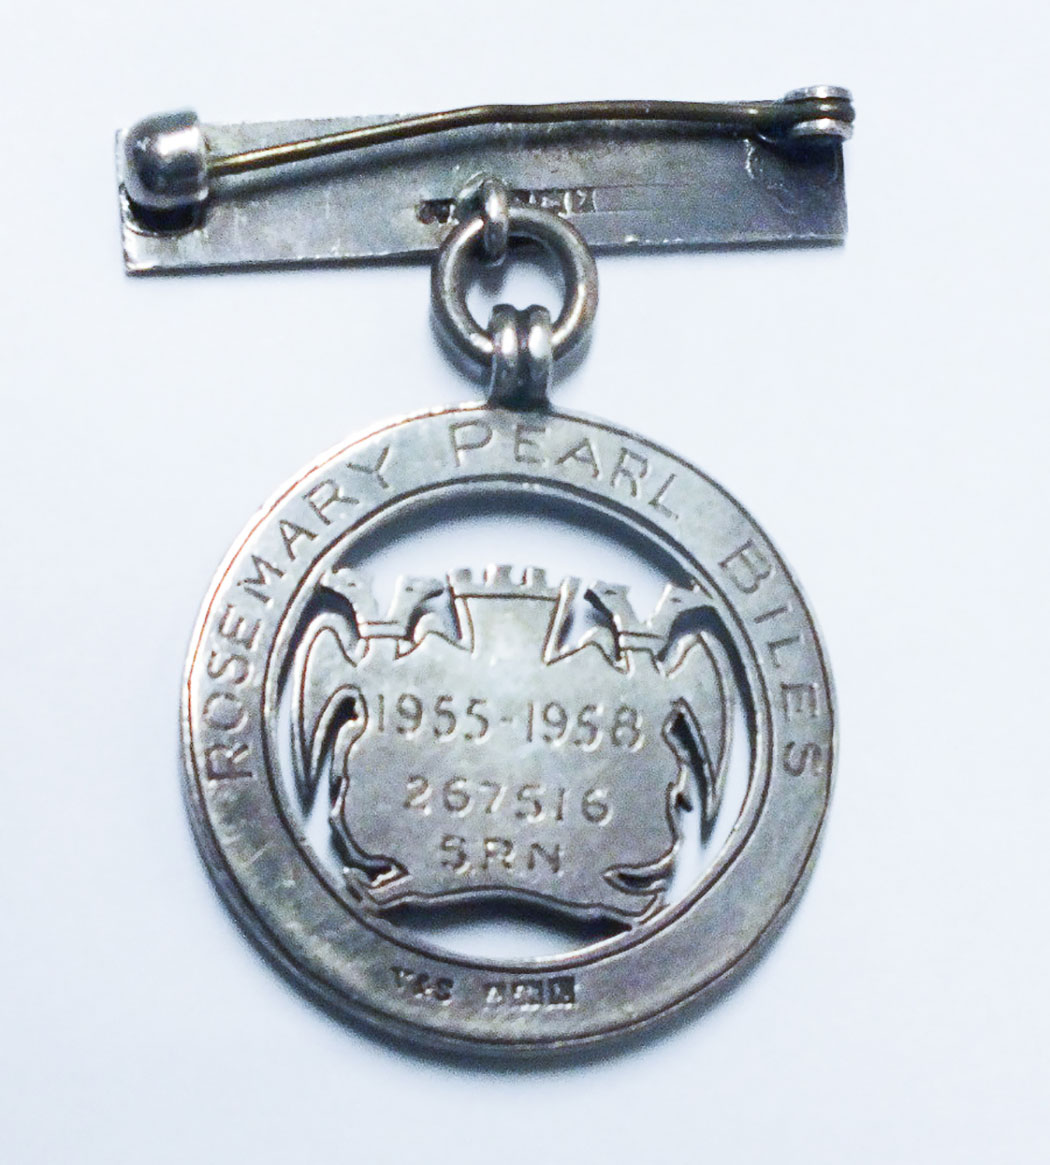 2019.39.3 nurse badge – reverse of Salisbury Infirmary silver badge